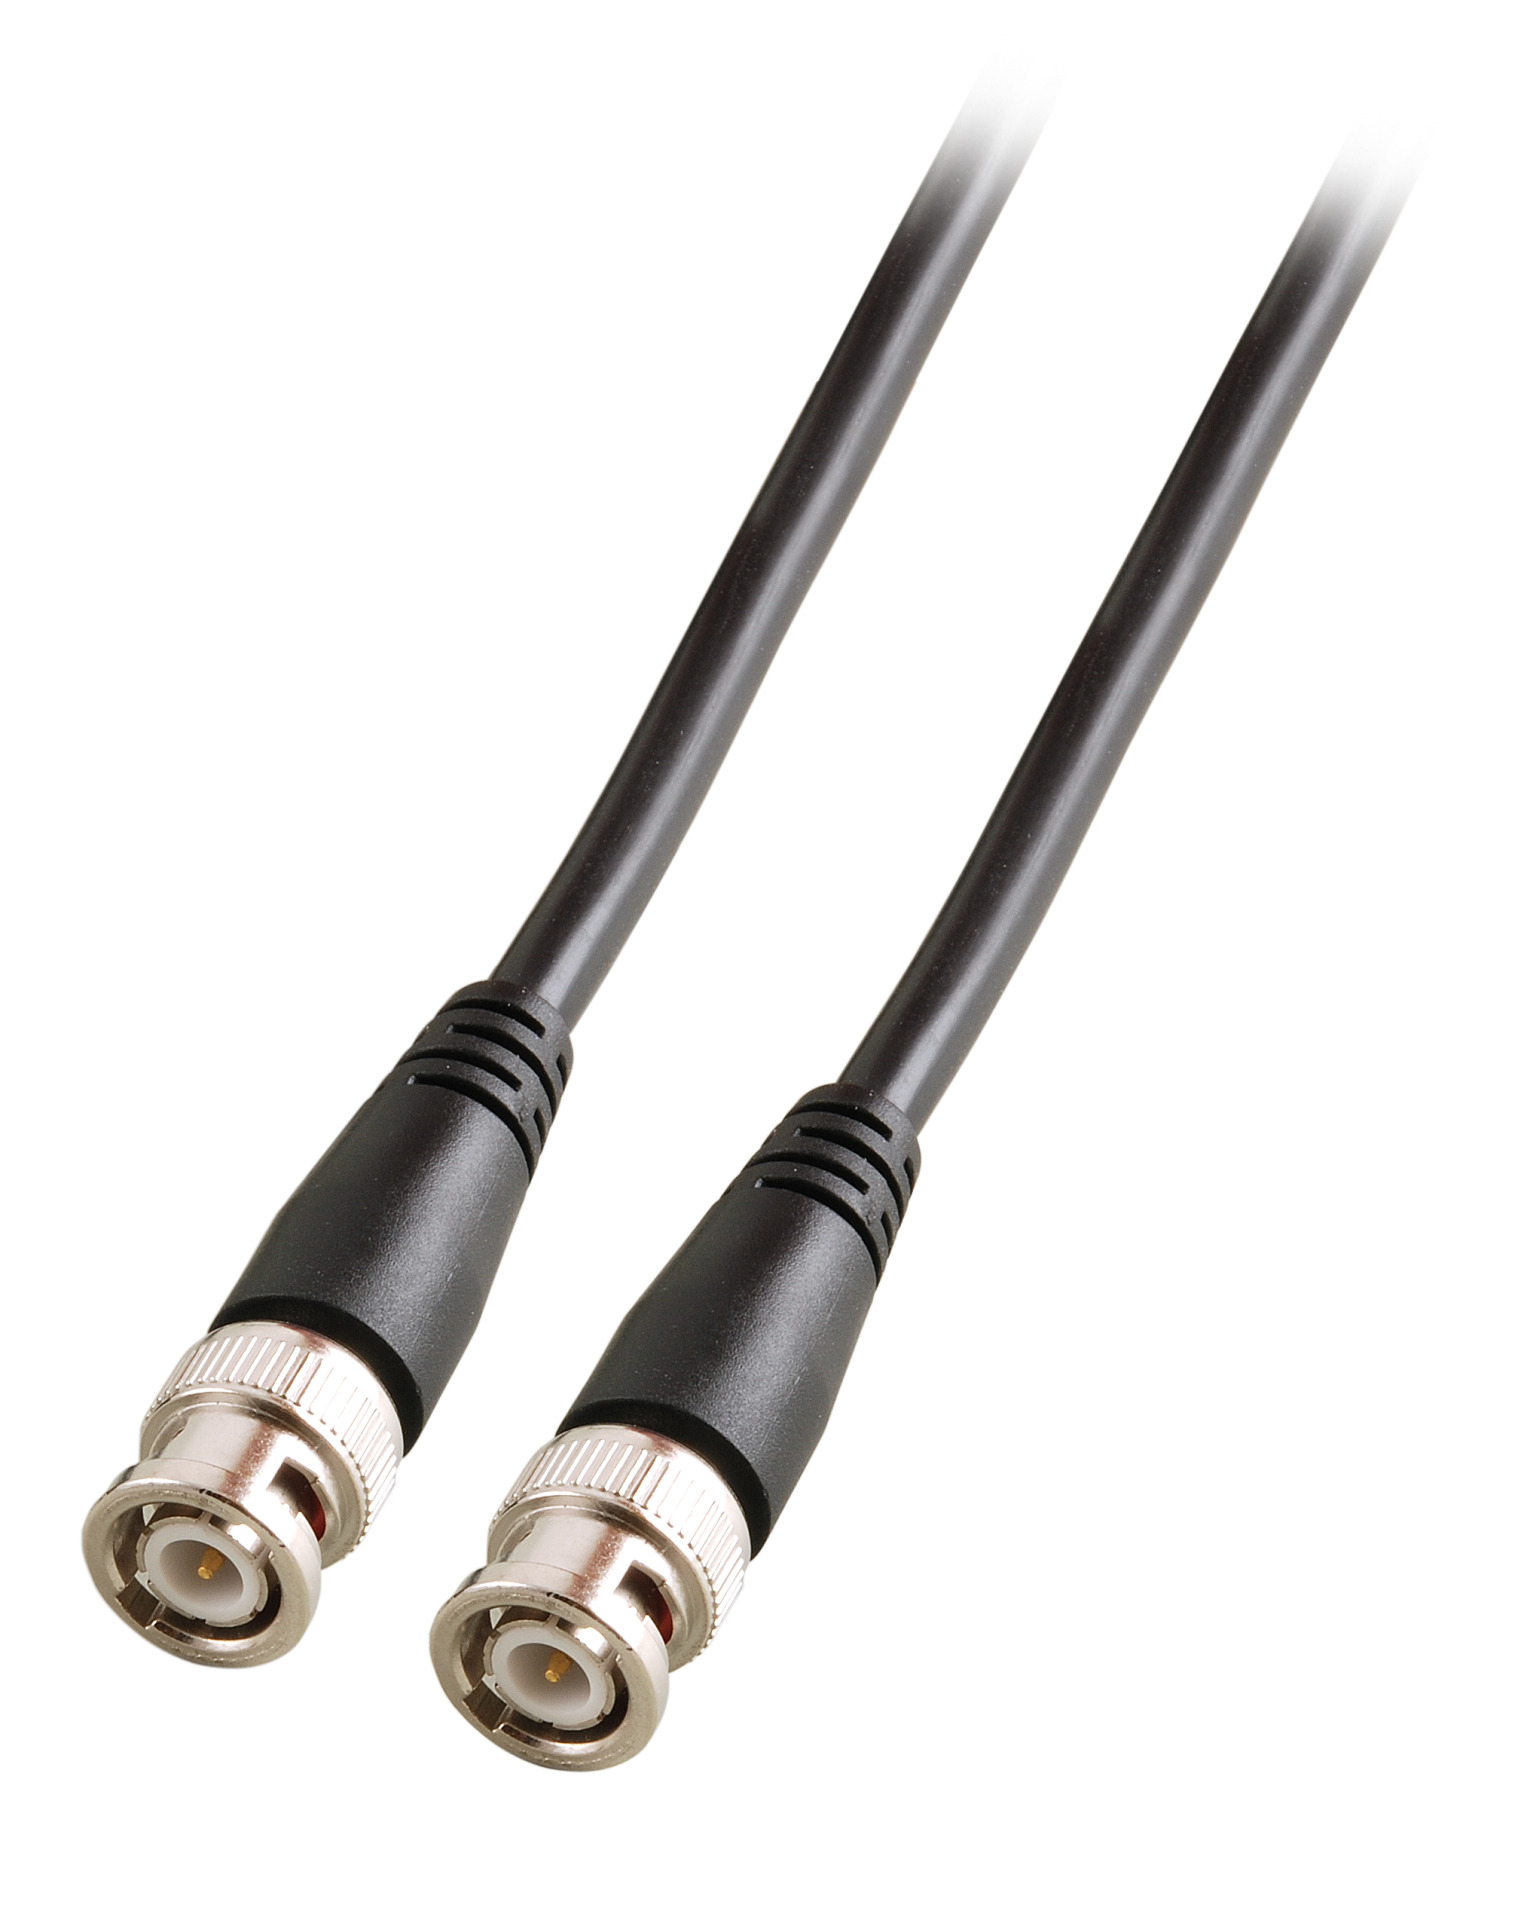 Coaxial cable RG59 B/U 75 Ohm, 2 x straight plugs, 1.0m